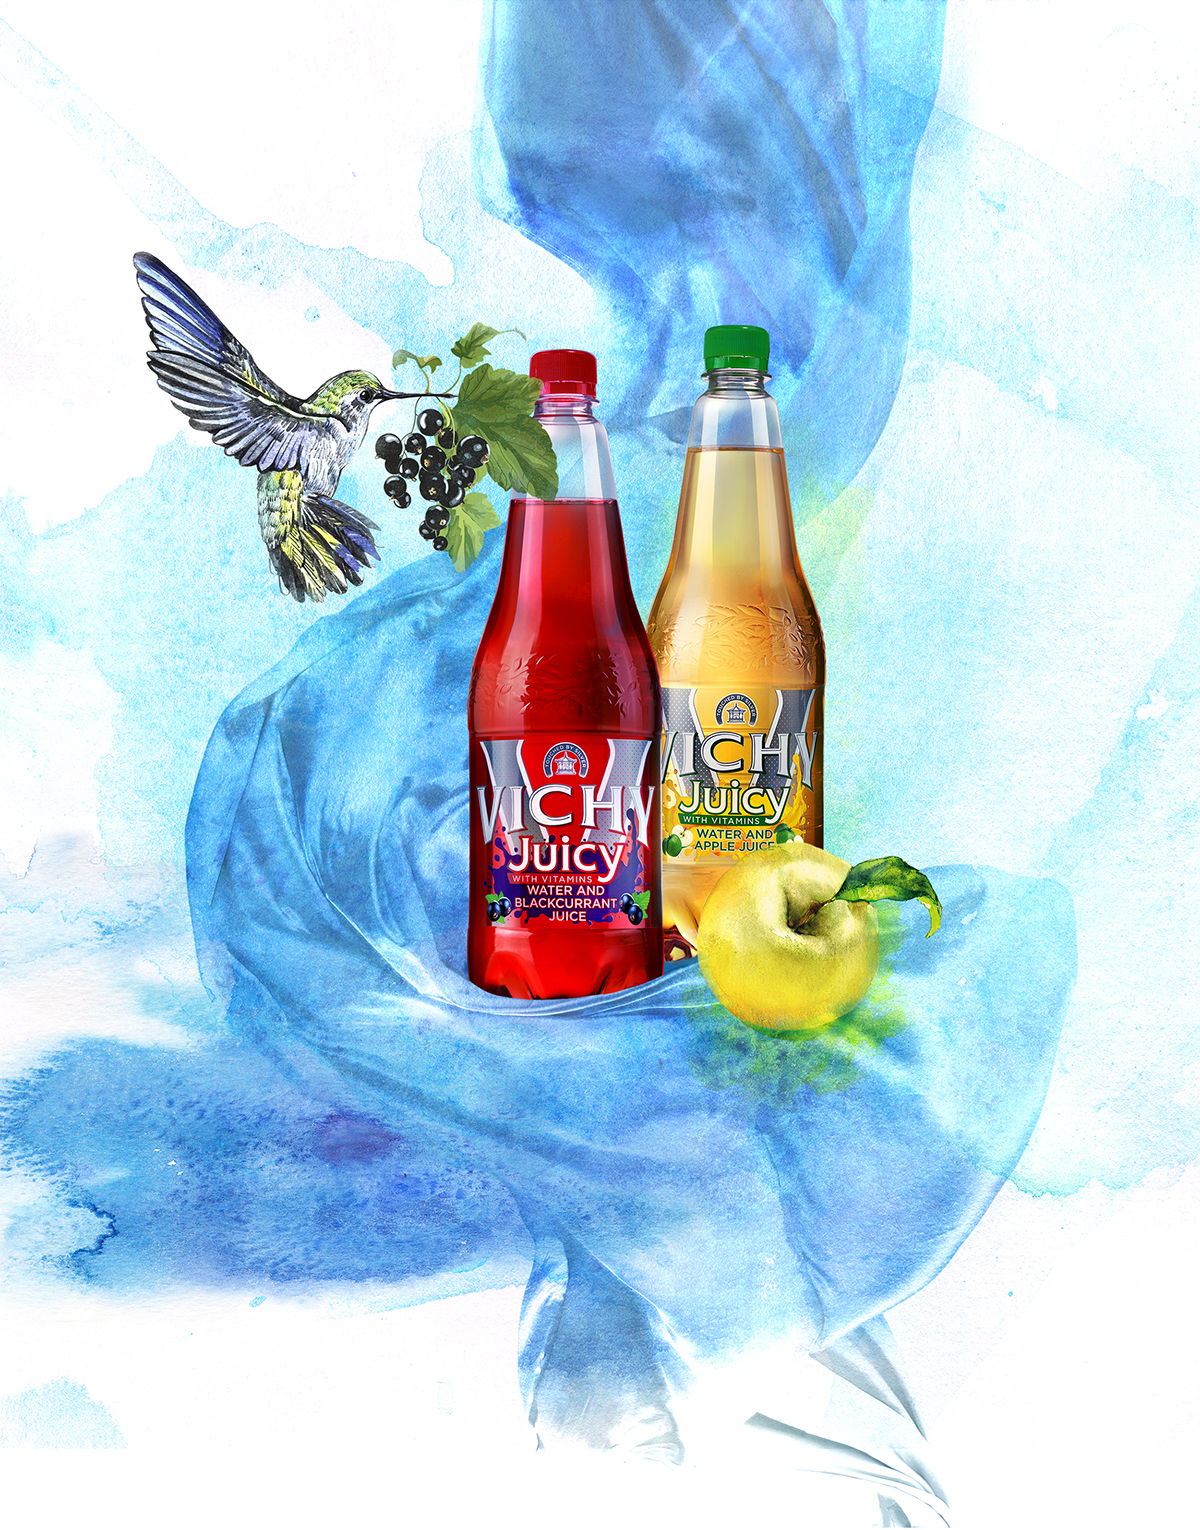 #saku #vichy #juicy #Advertising #print ad #Print Design #illustration #Watercolor #hummingbird